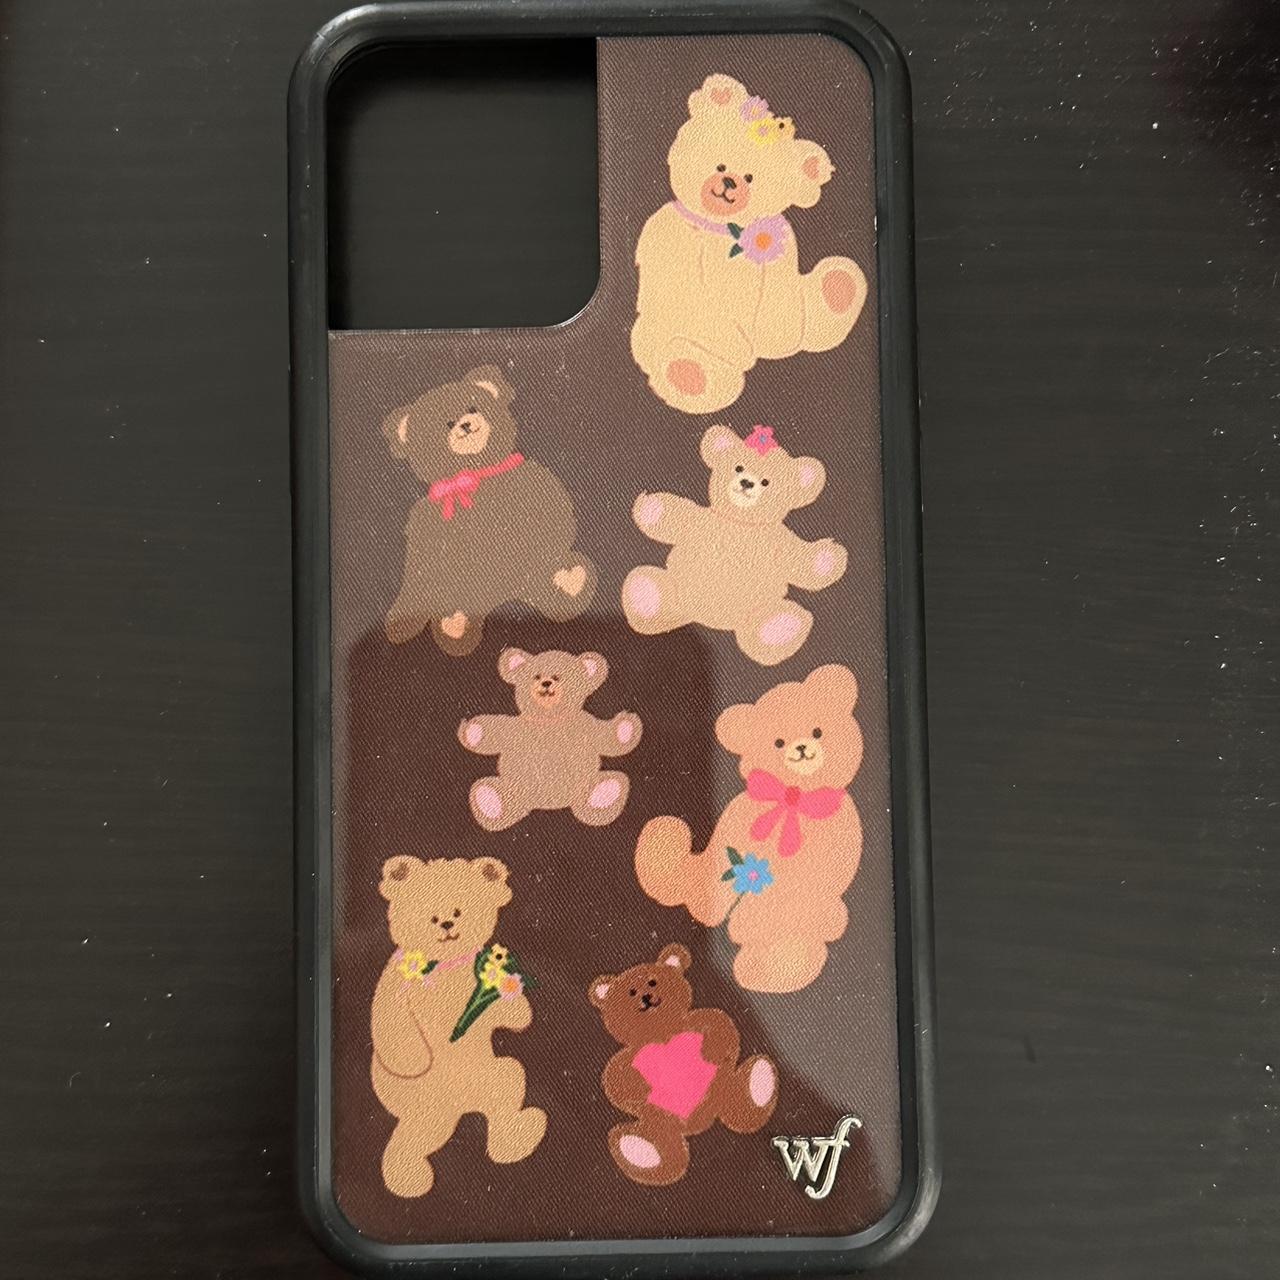 Bear-y Cute iPhone 12 Pro Max Case